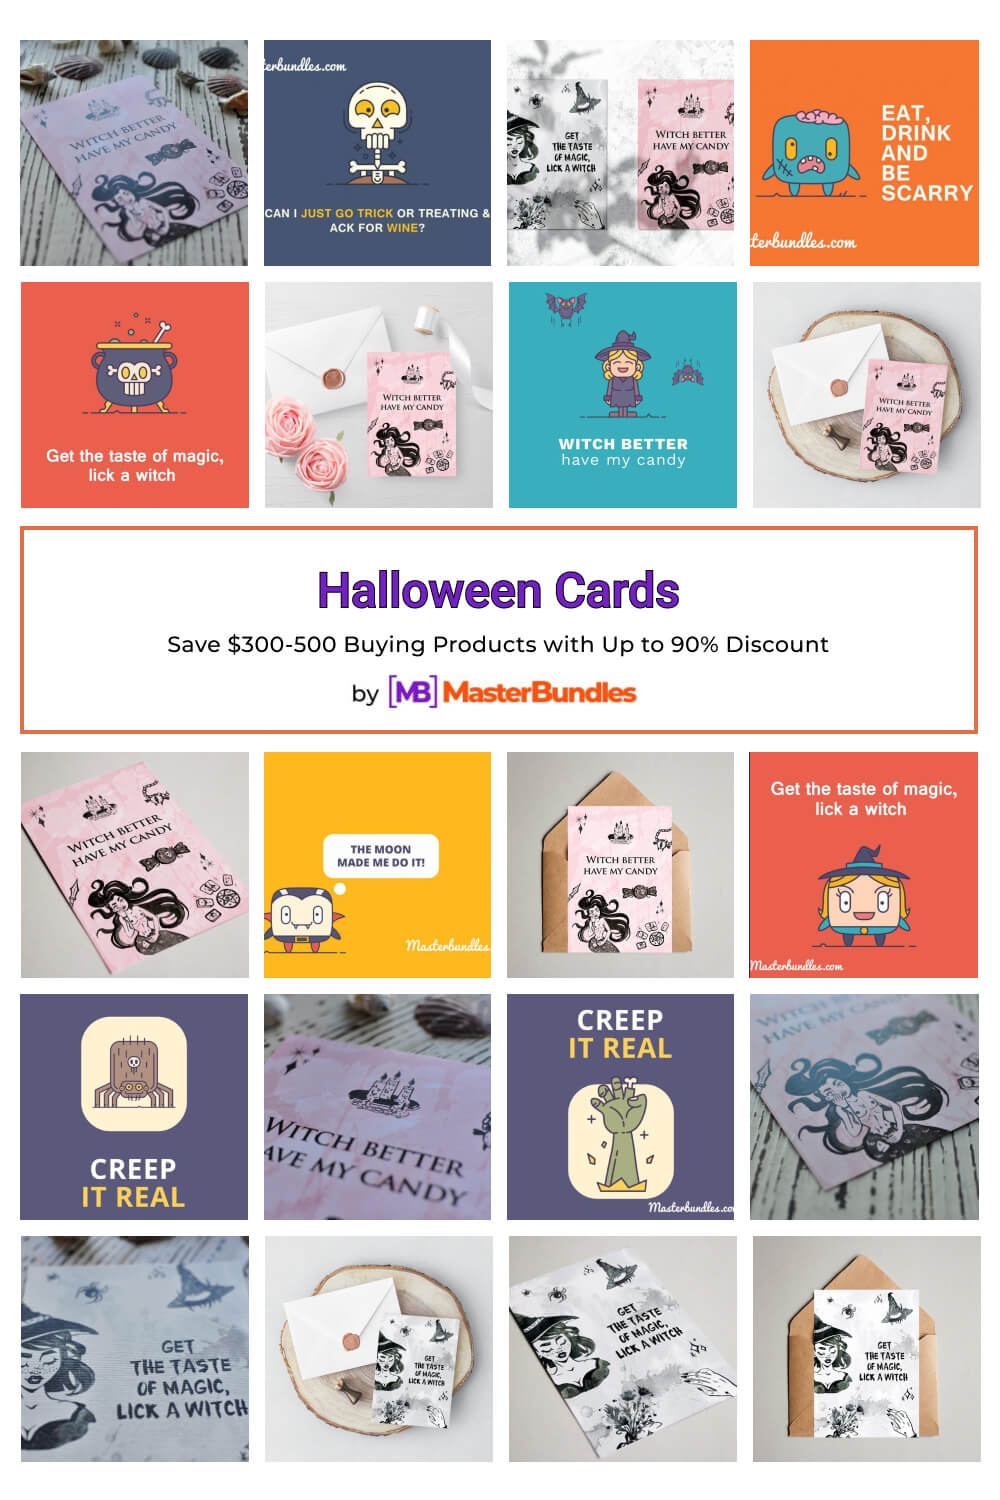 halloween cards pinterest image.